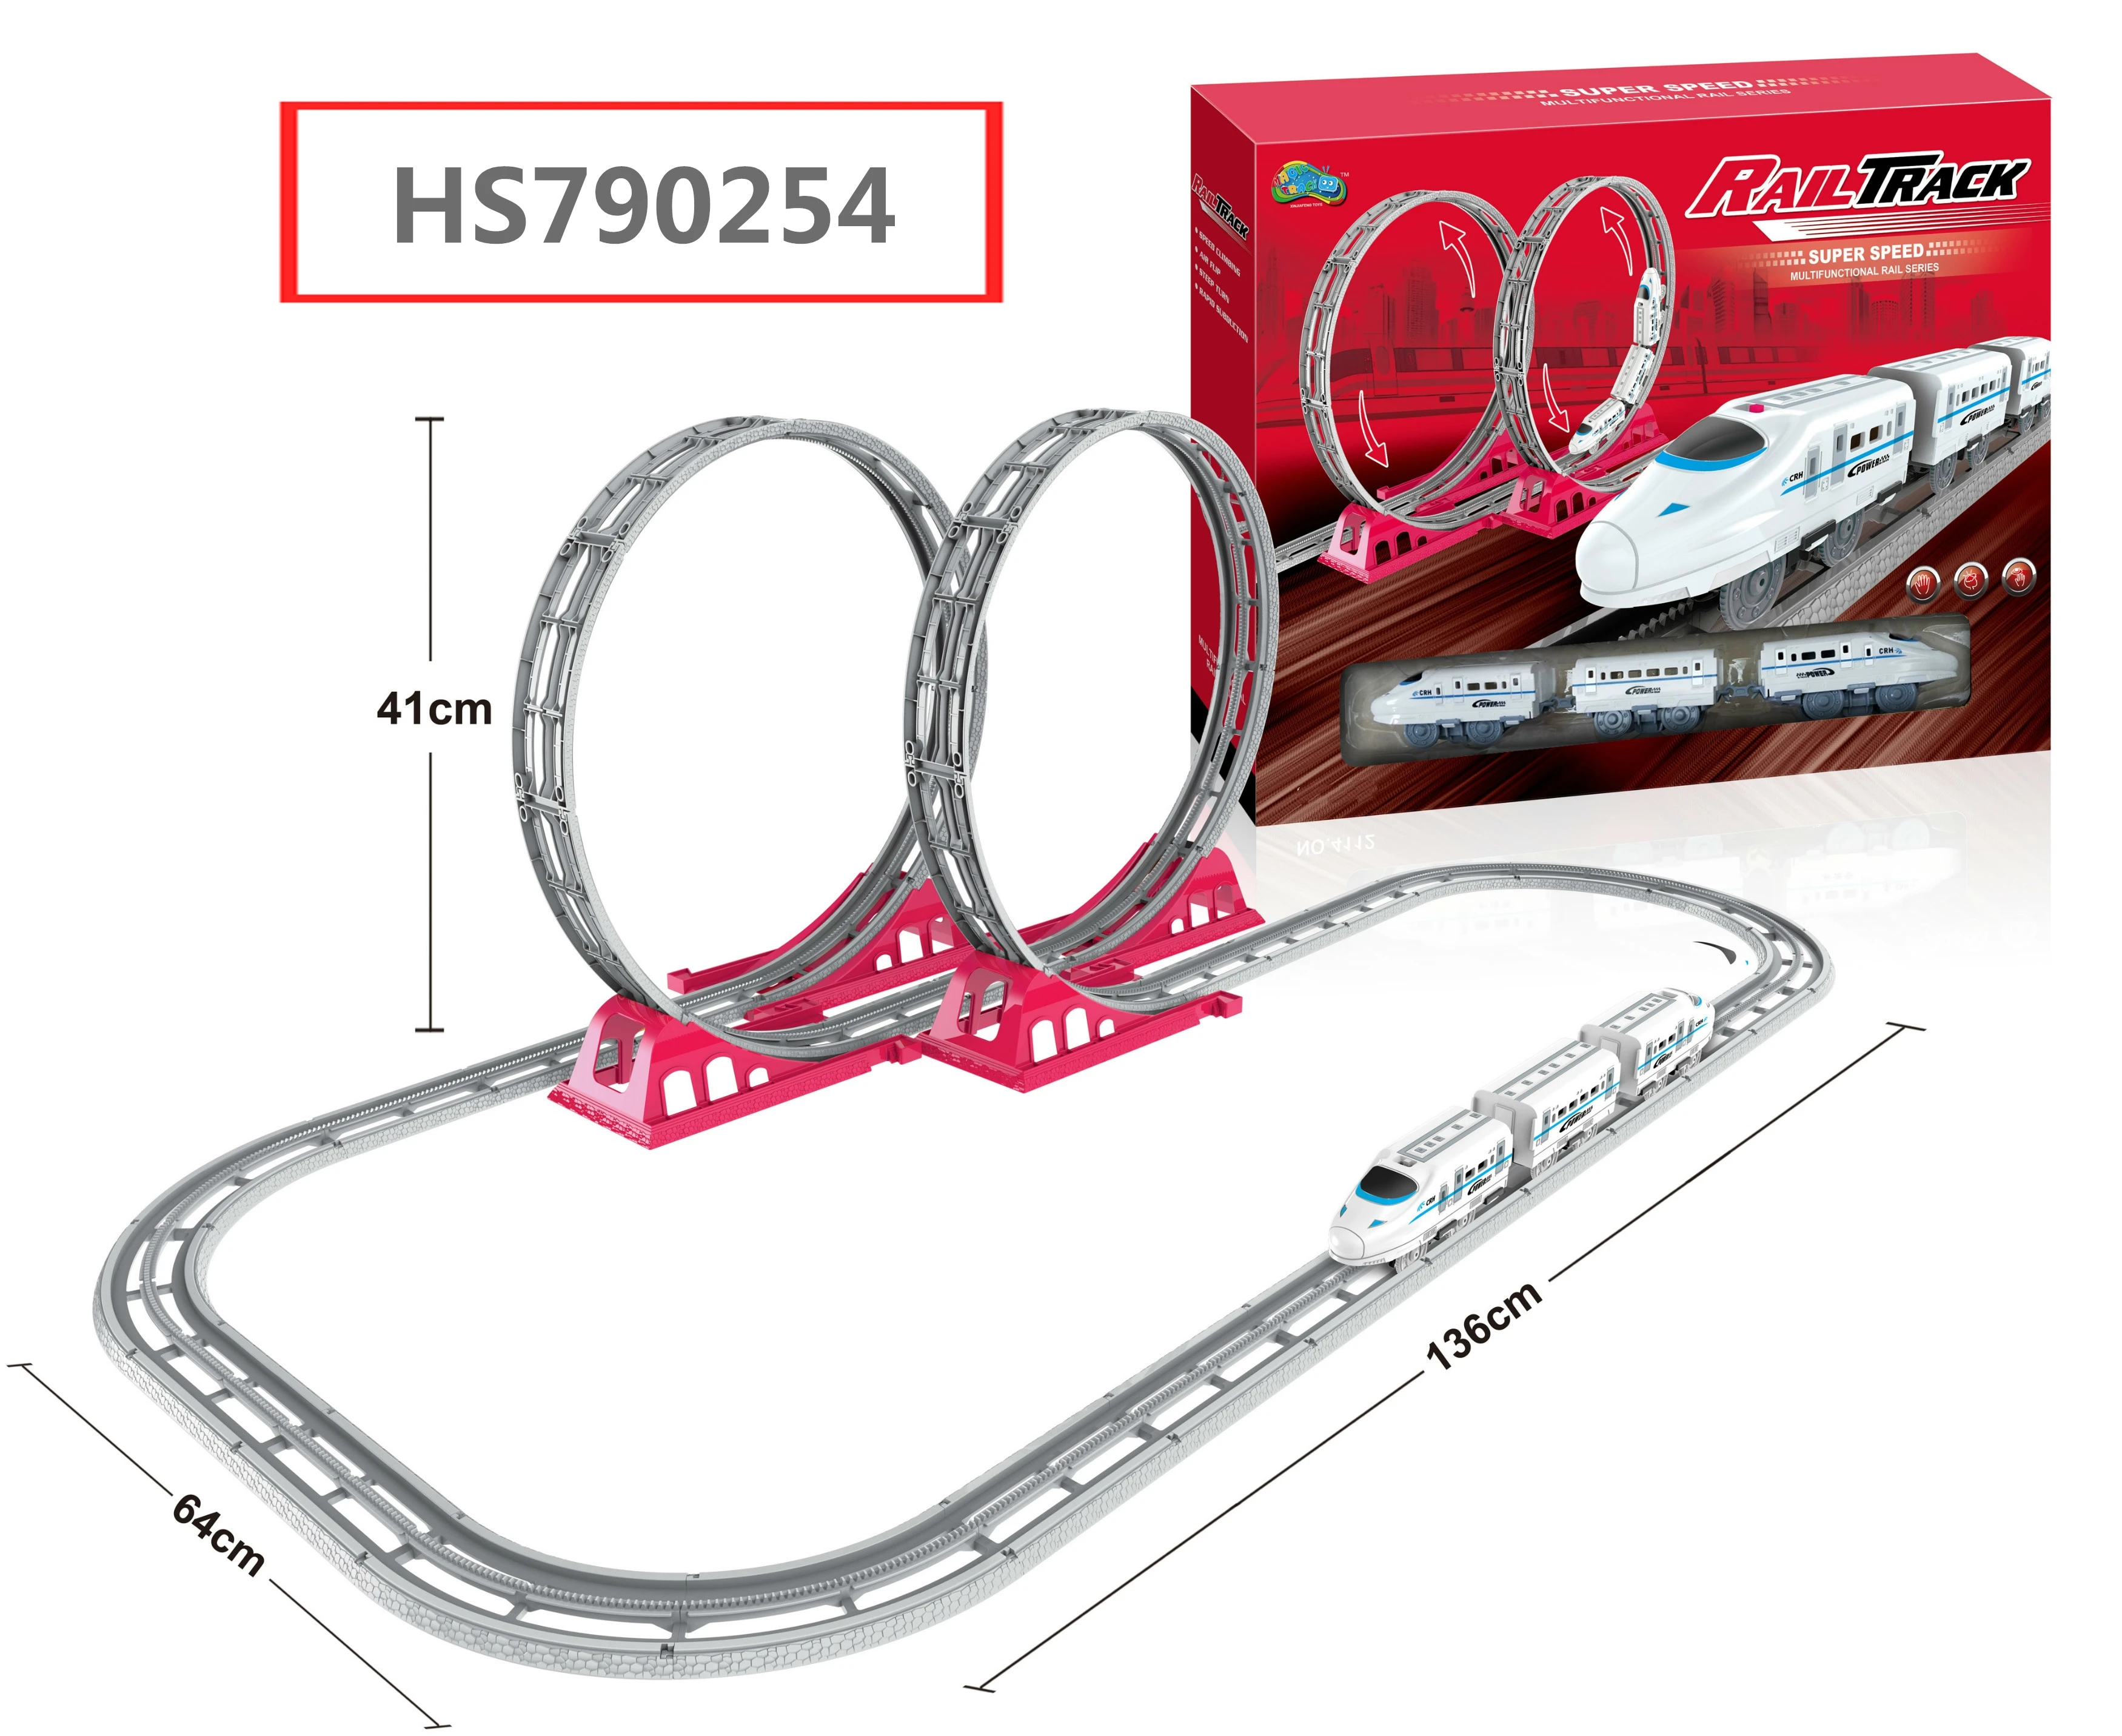 HS790254, Huwsin Toys, Electric Rail Racing Car Orbit Track Racing Car